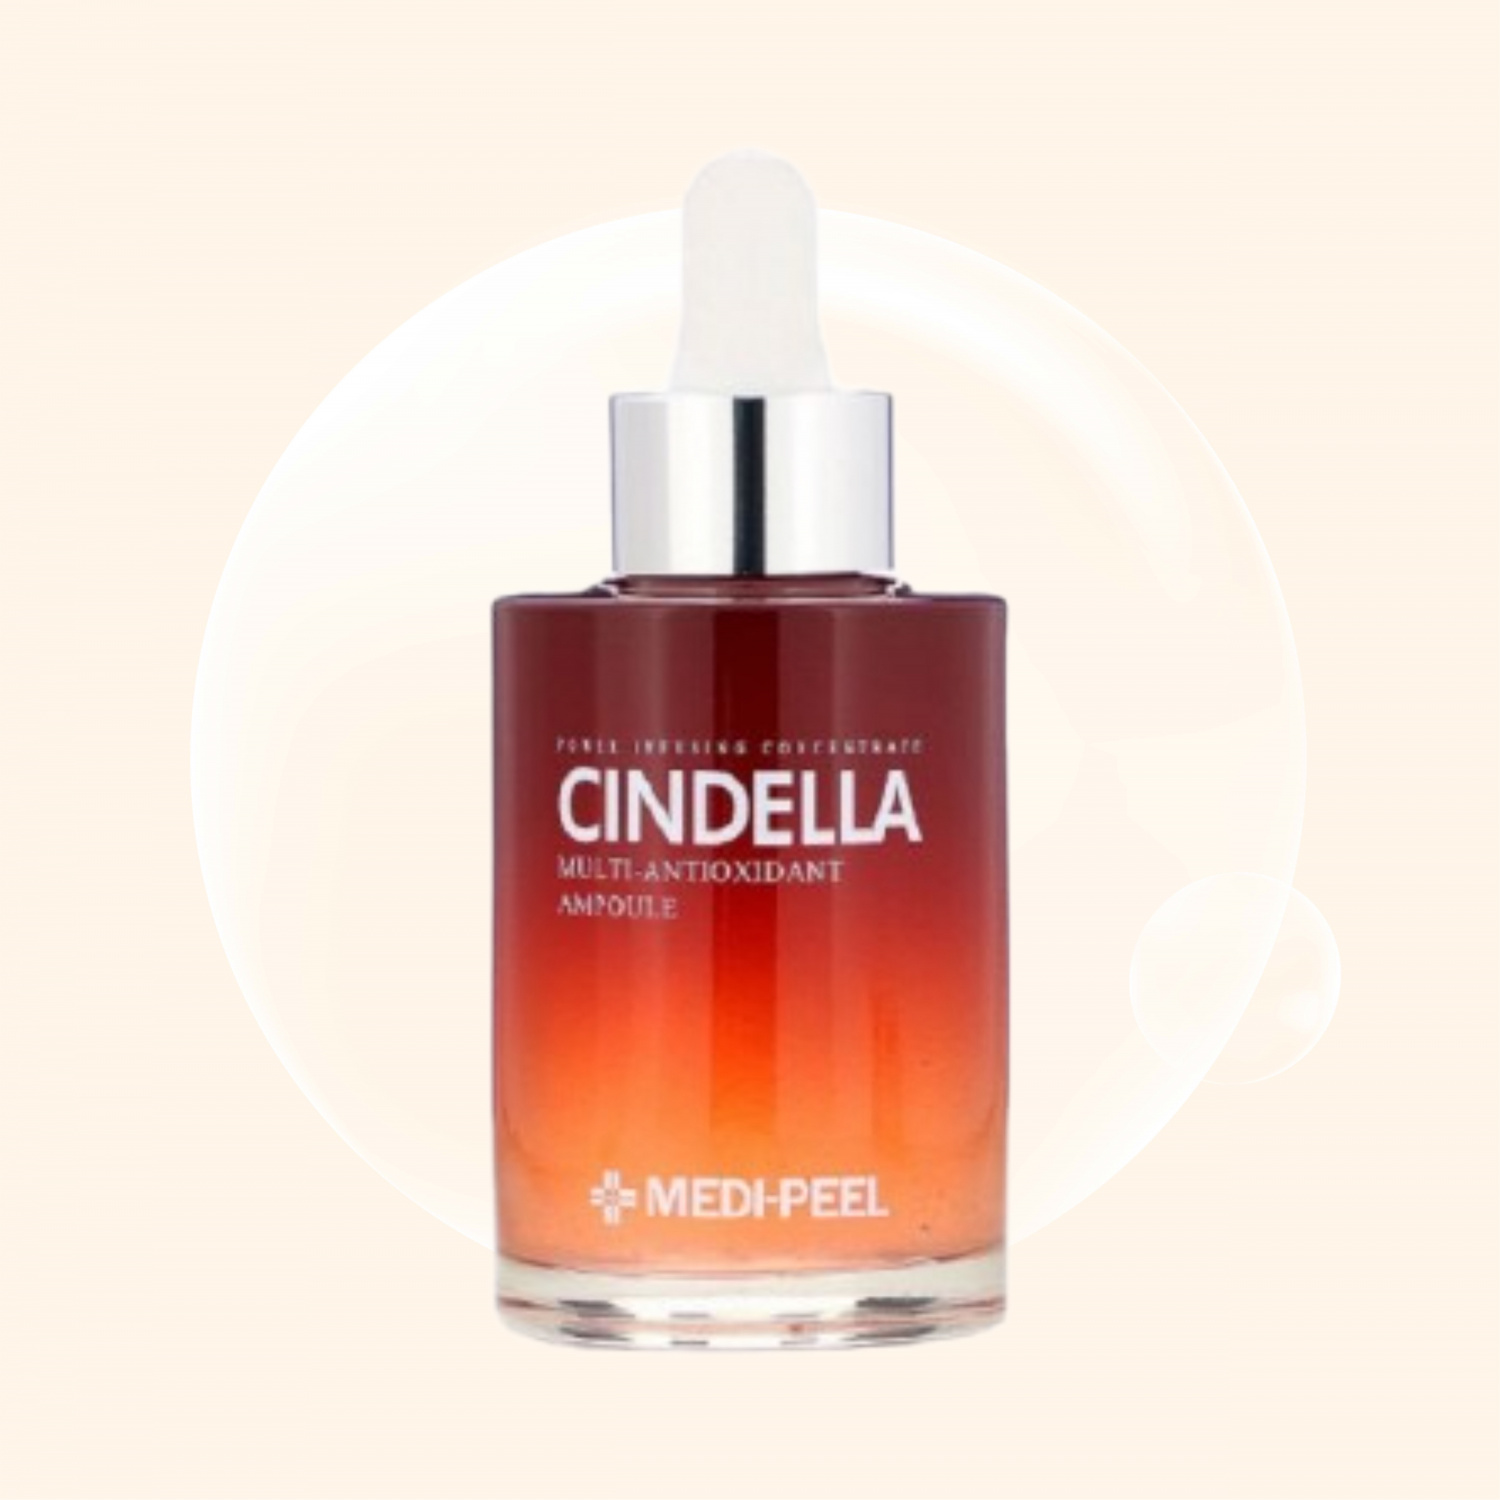 Medi-Peel Cindella Multi-antioxidant Ampoule 100 мл